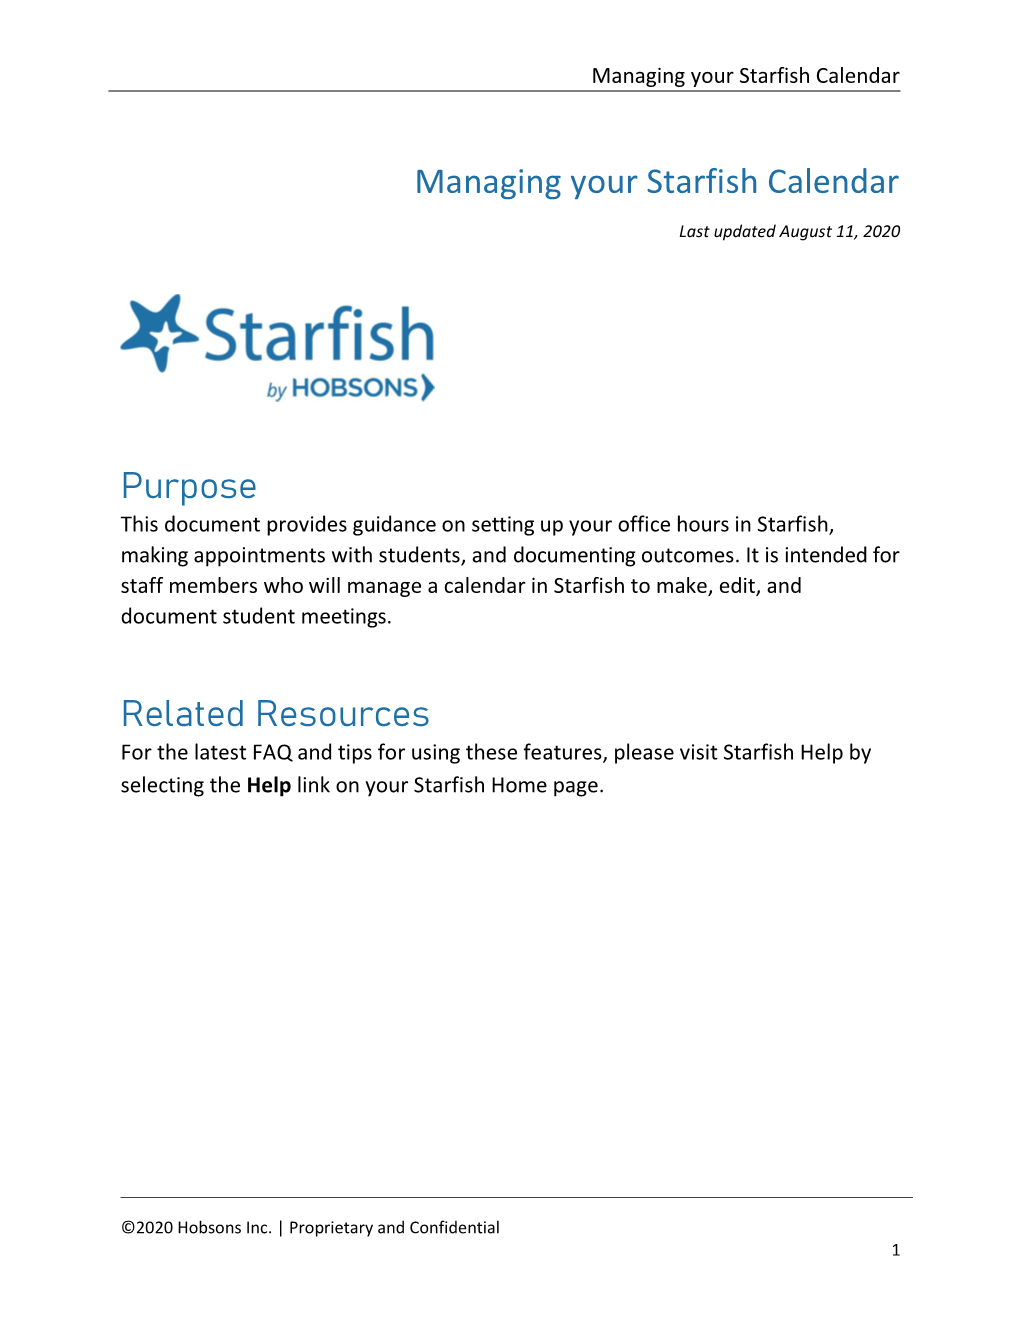 Managing Your Starfish Calendar Purpose Related Resources